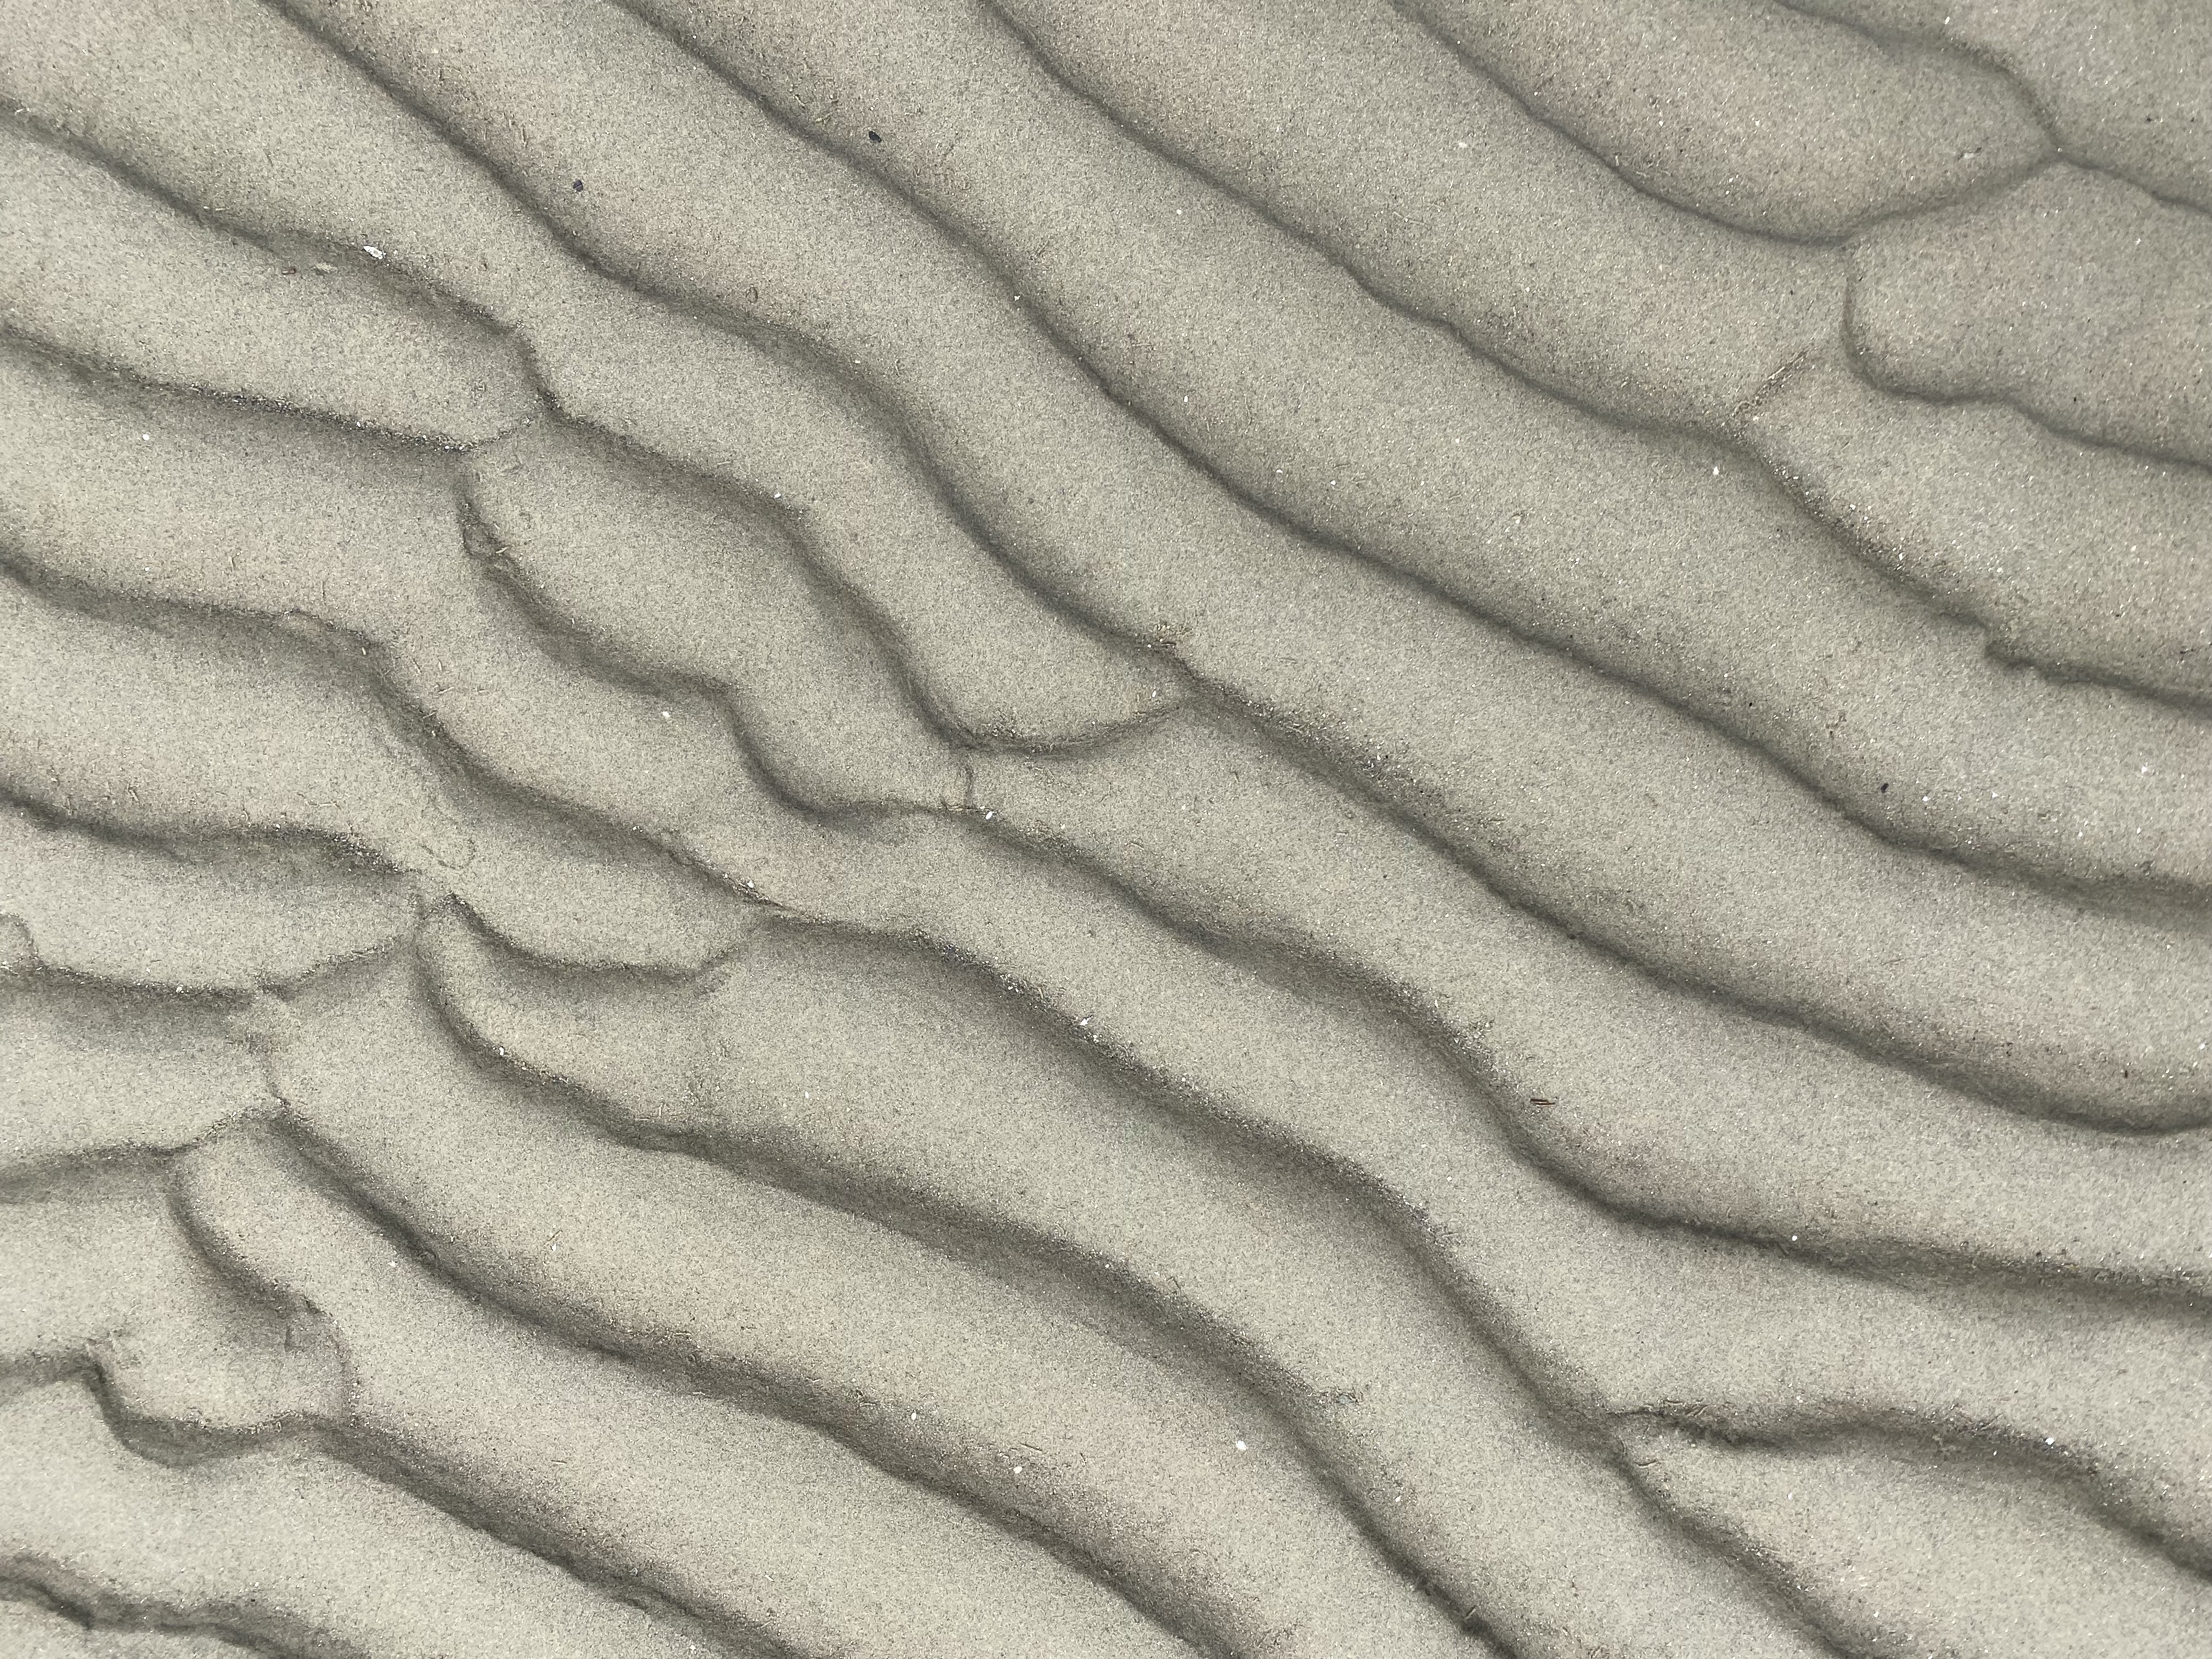 ridges in the sand